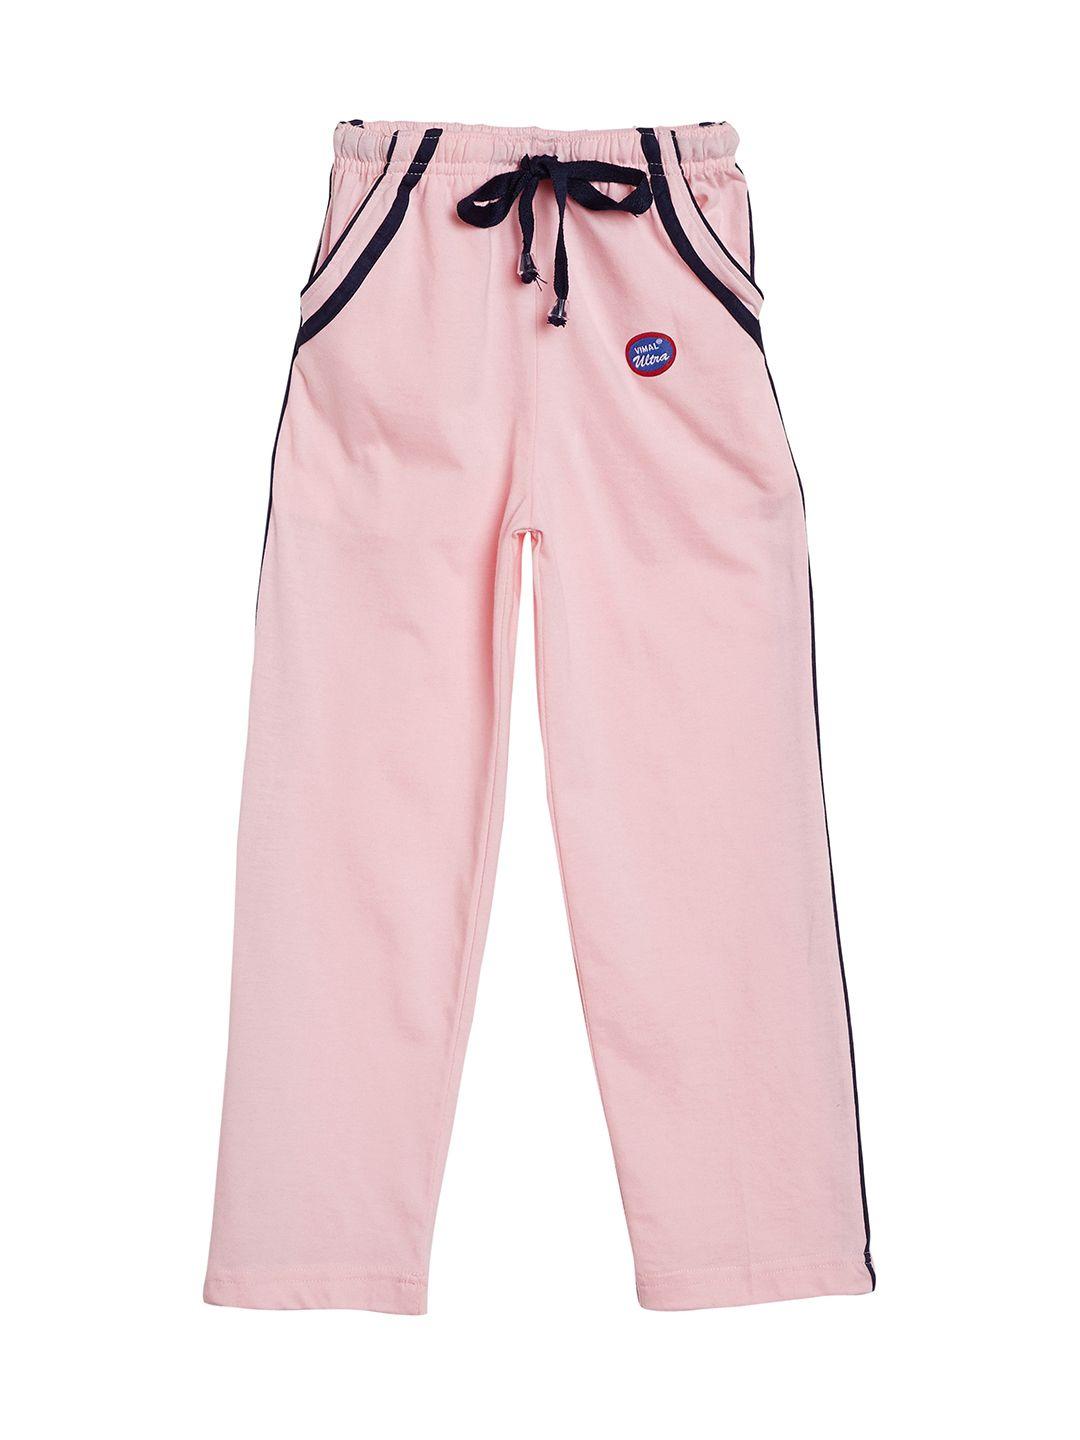 vimal jonney boys pink solid slim fit track pants